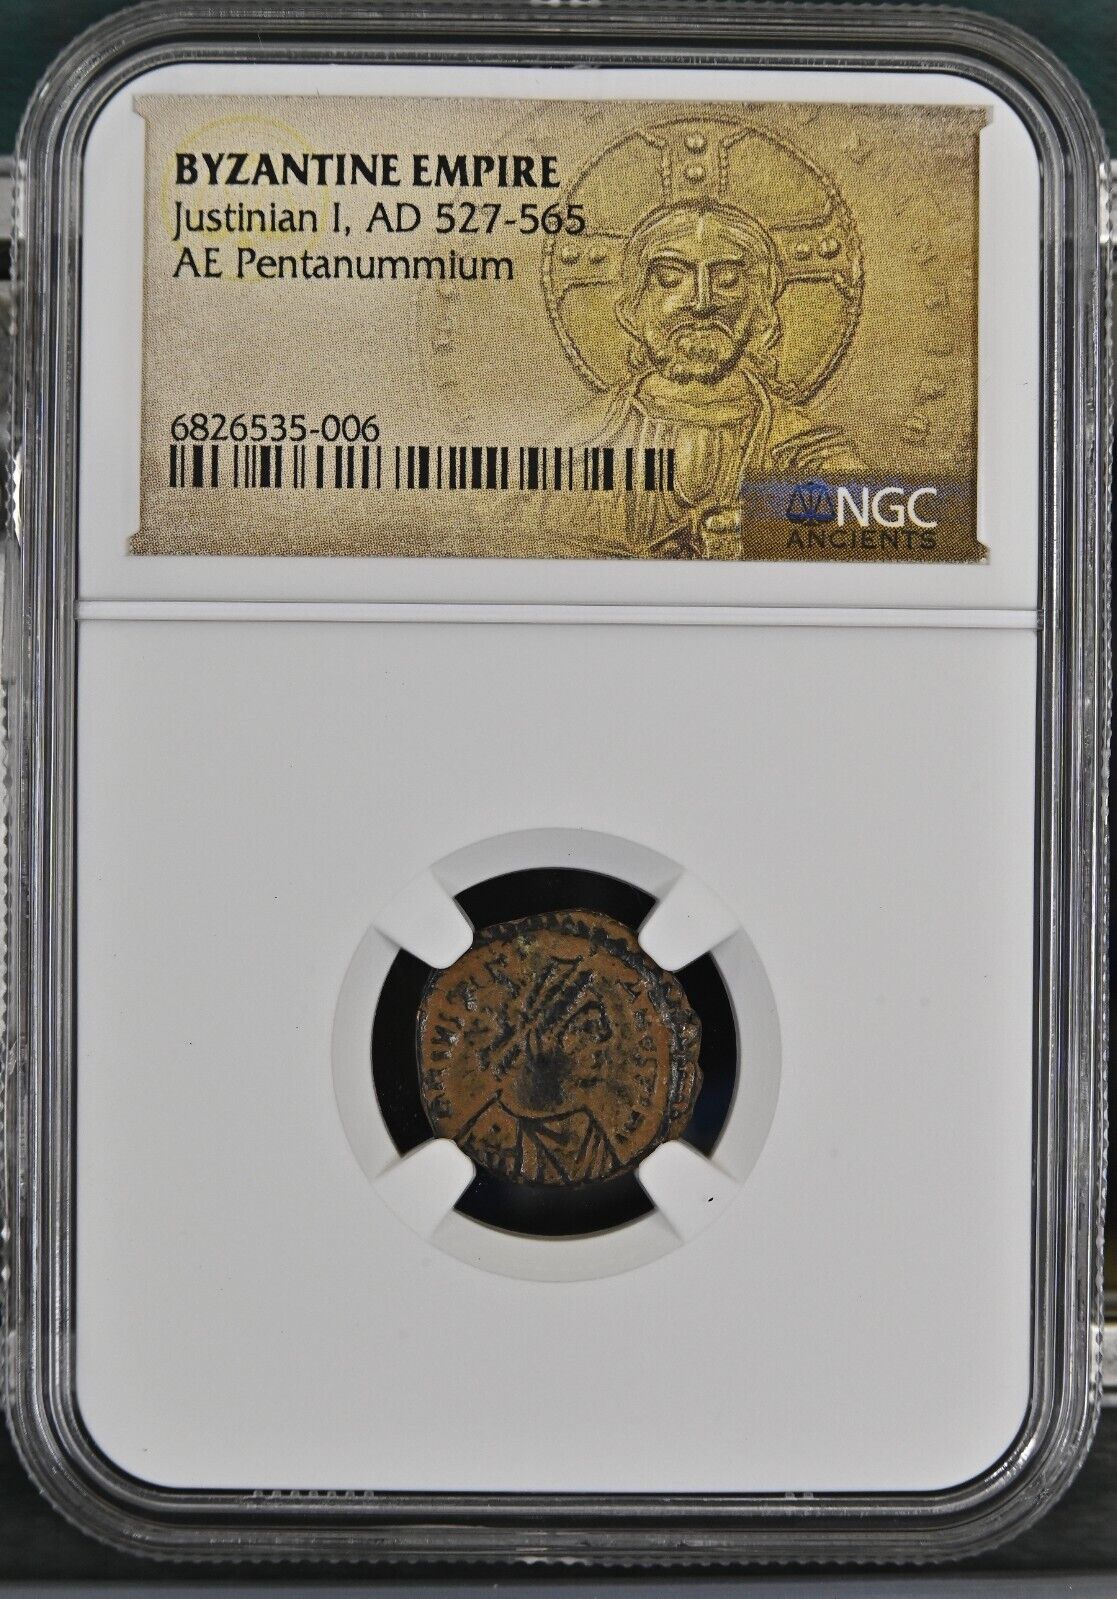 NGC AE Pentanummium of Justinian I the Great AD 527-565 - Byzantine - High Grade